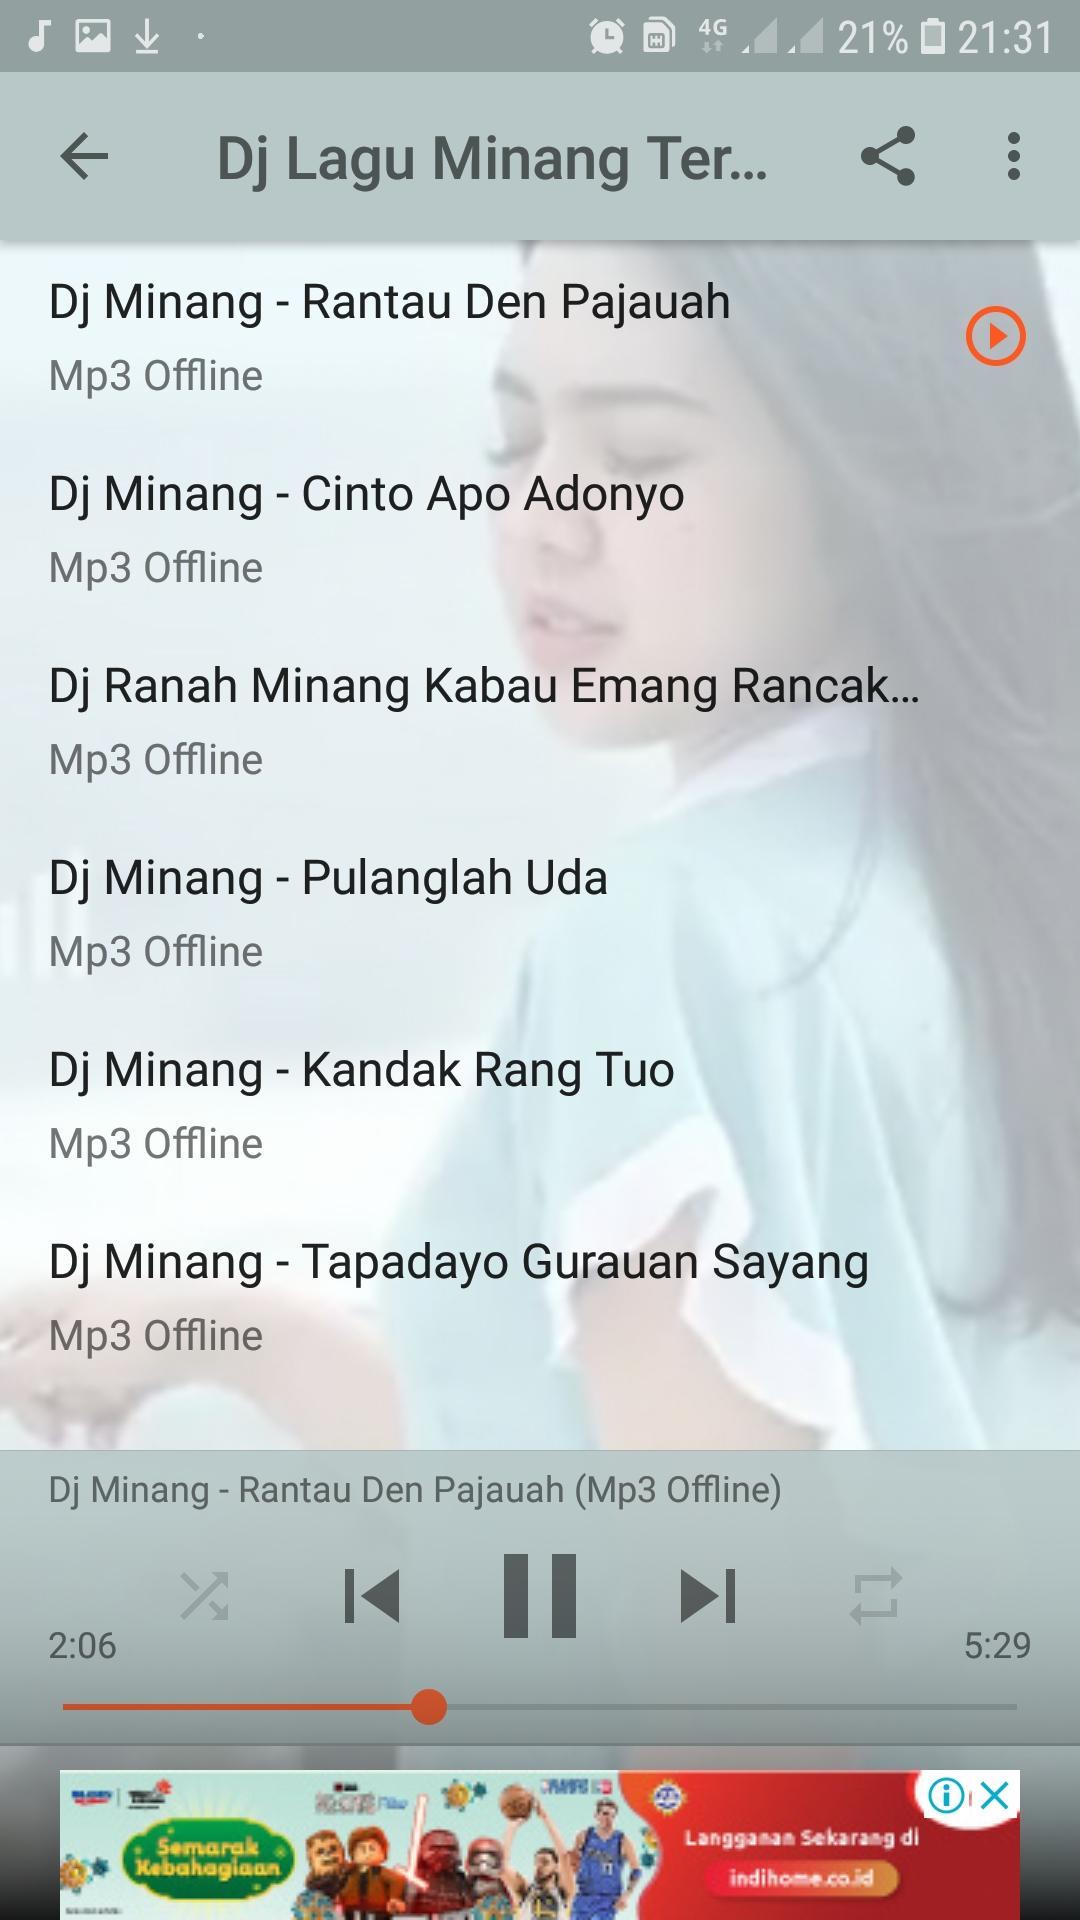 Dj Lagu Minang Terbaru 2019 - Rantau Den Pajauah APK for Android Download